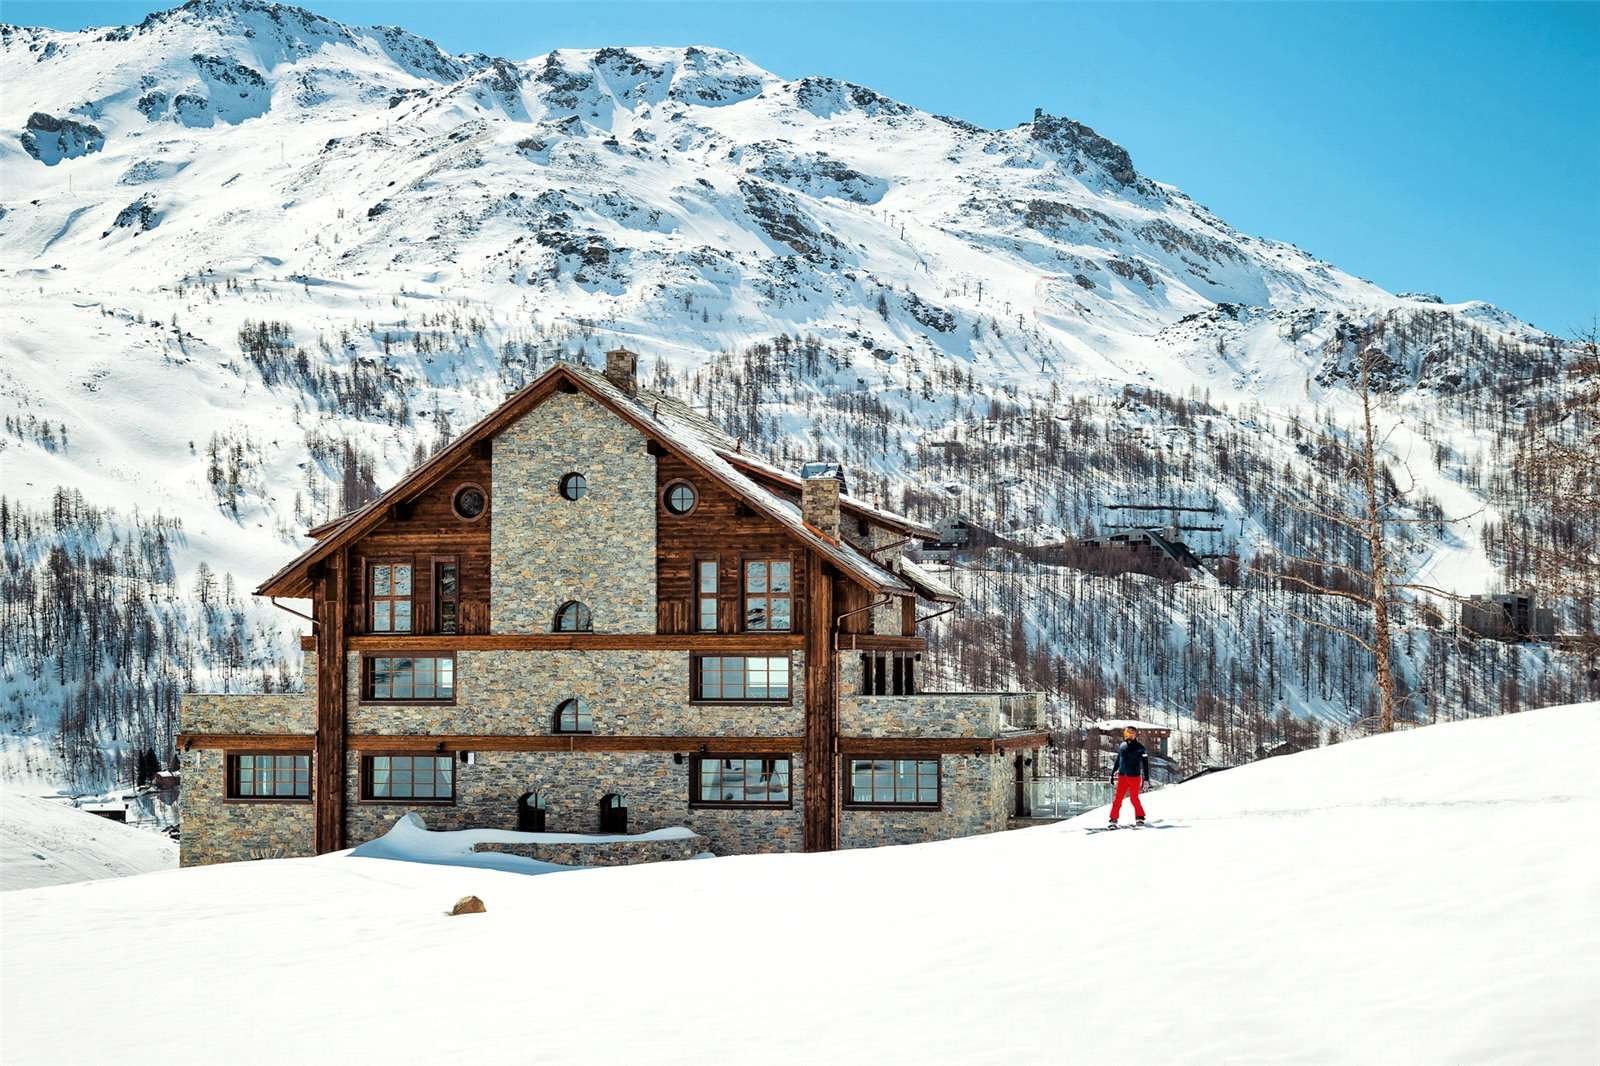 Francis+York+ Luxurious Ski Chalet in the Italian Alps 00017.jpg